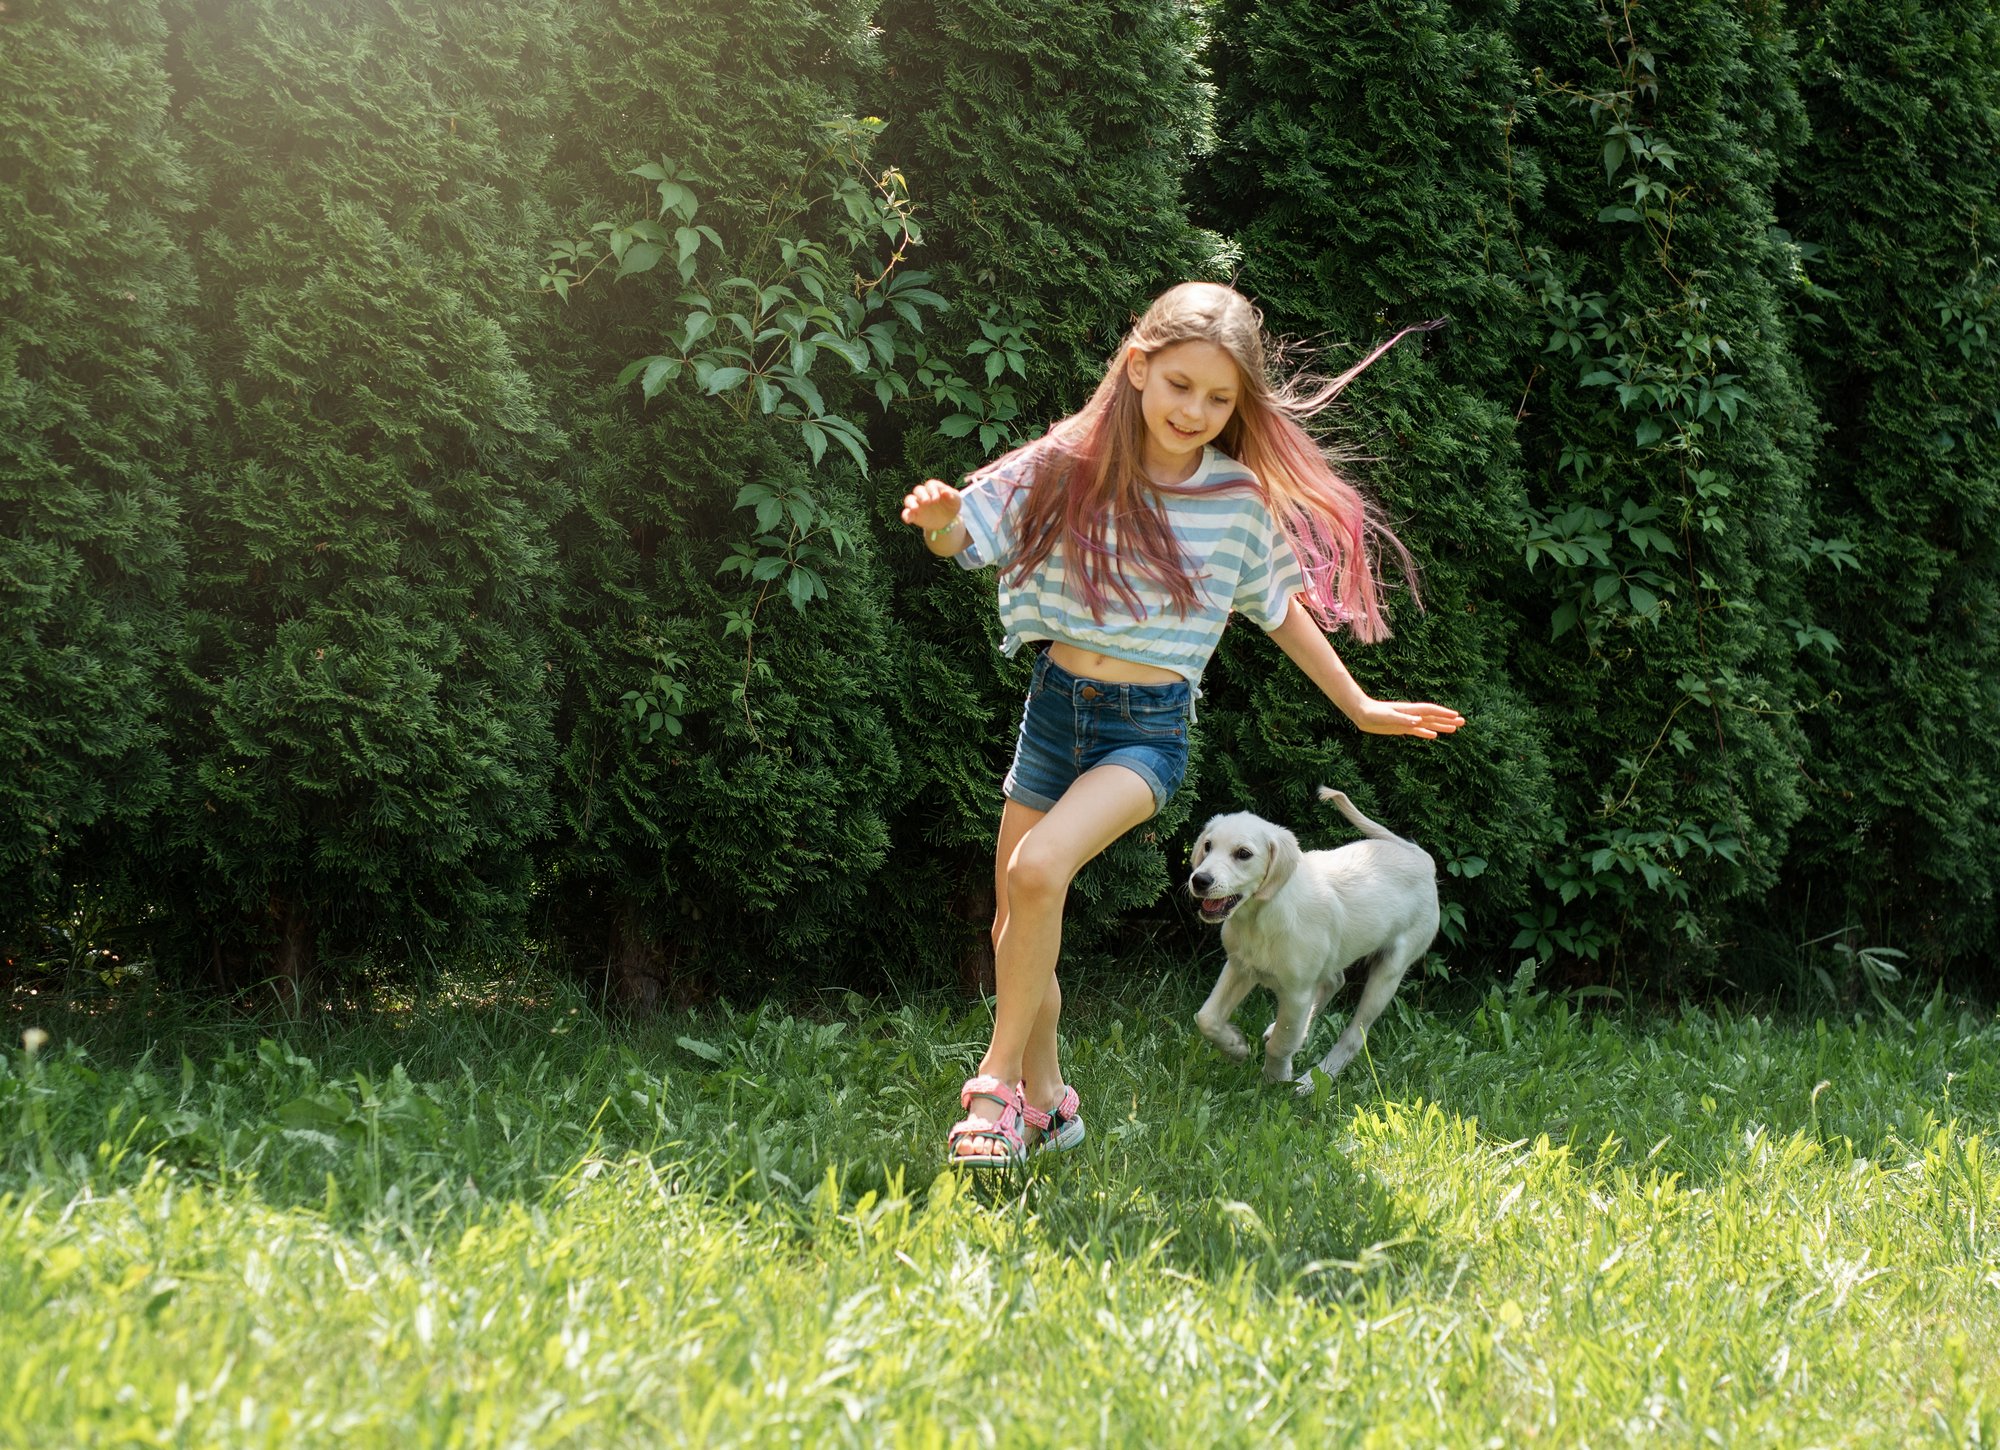 vecteezy_little-girl-playing-with-a-golden-retriever-puppy-in-the-garden_32000331